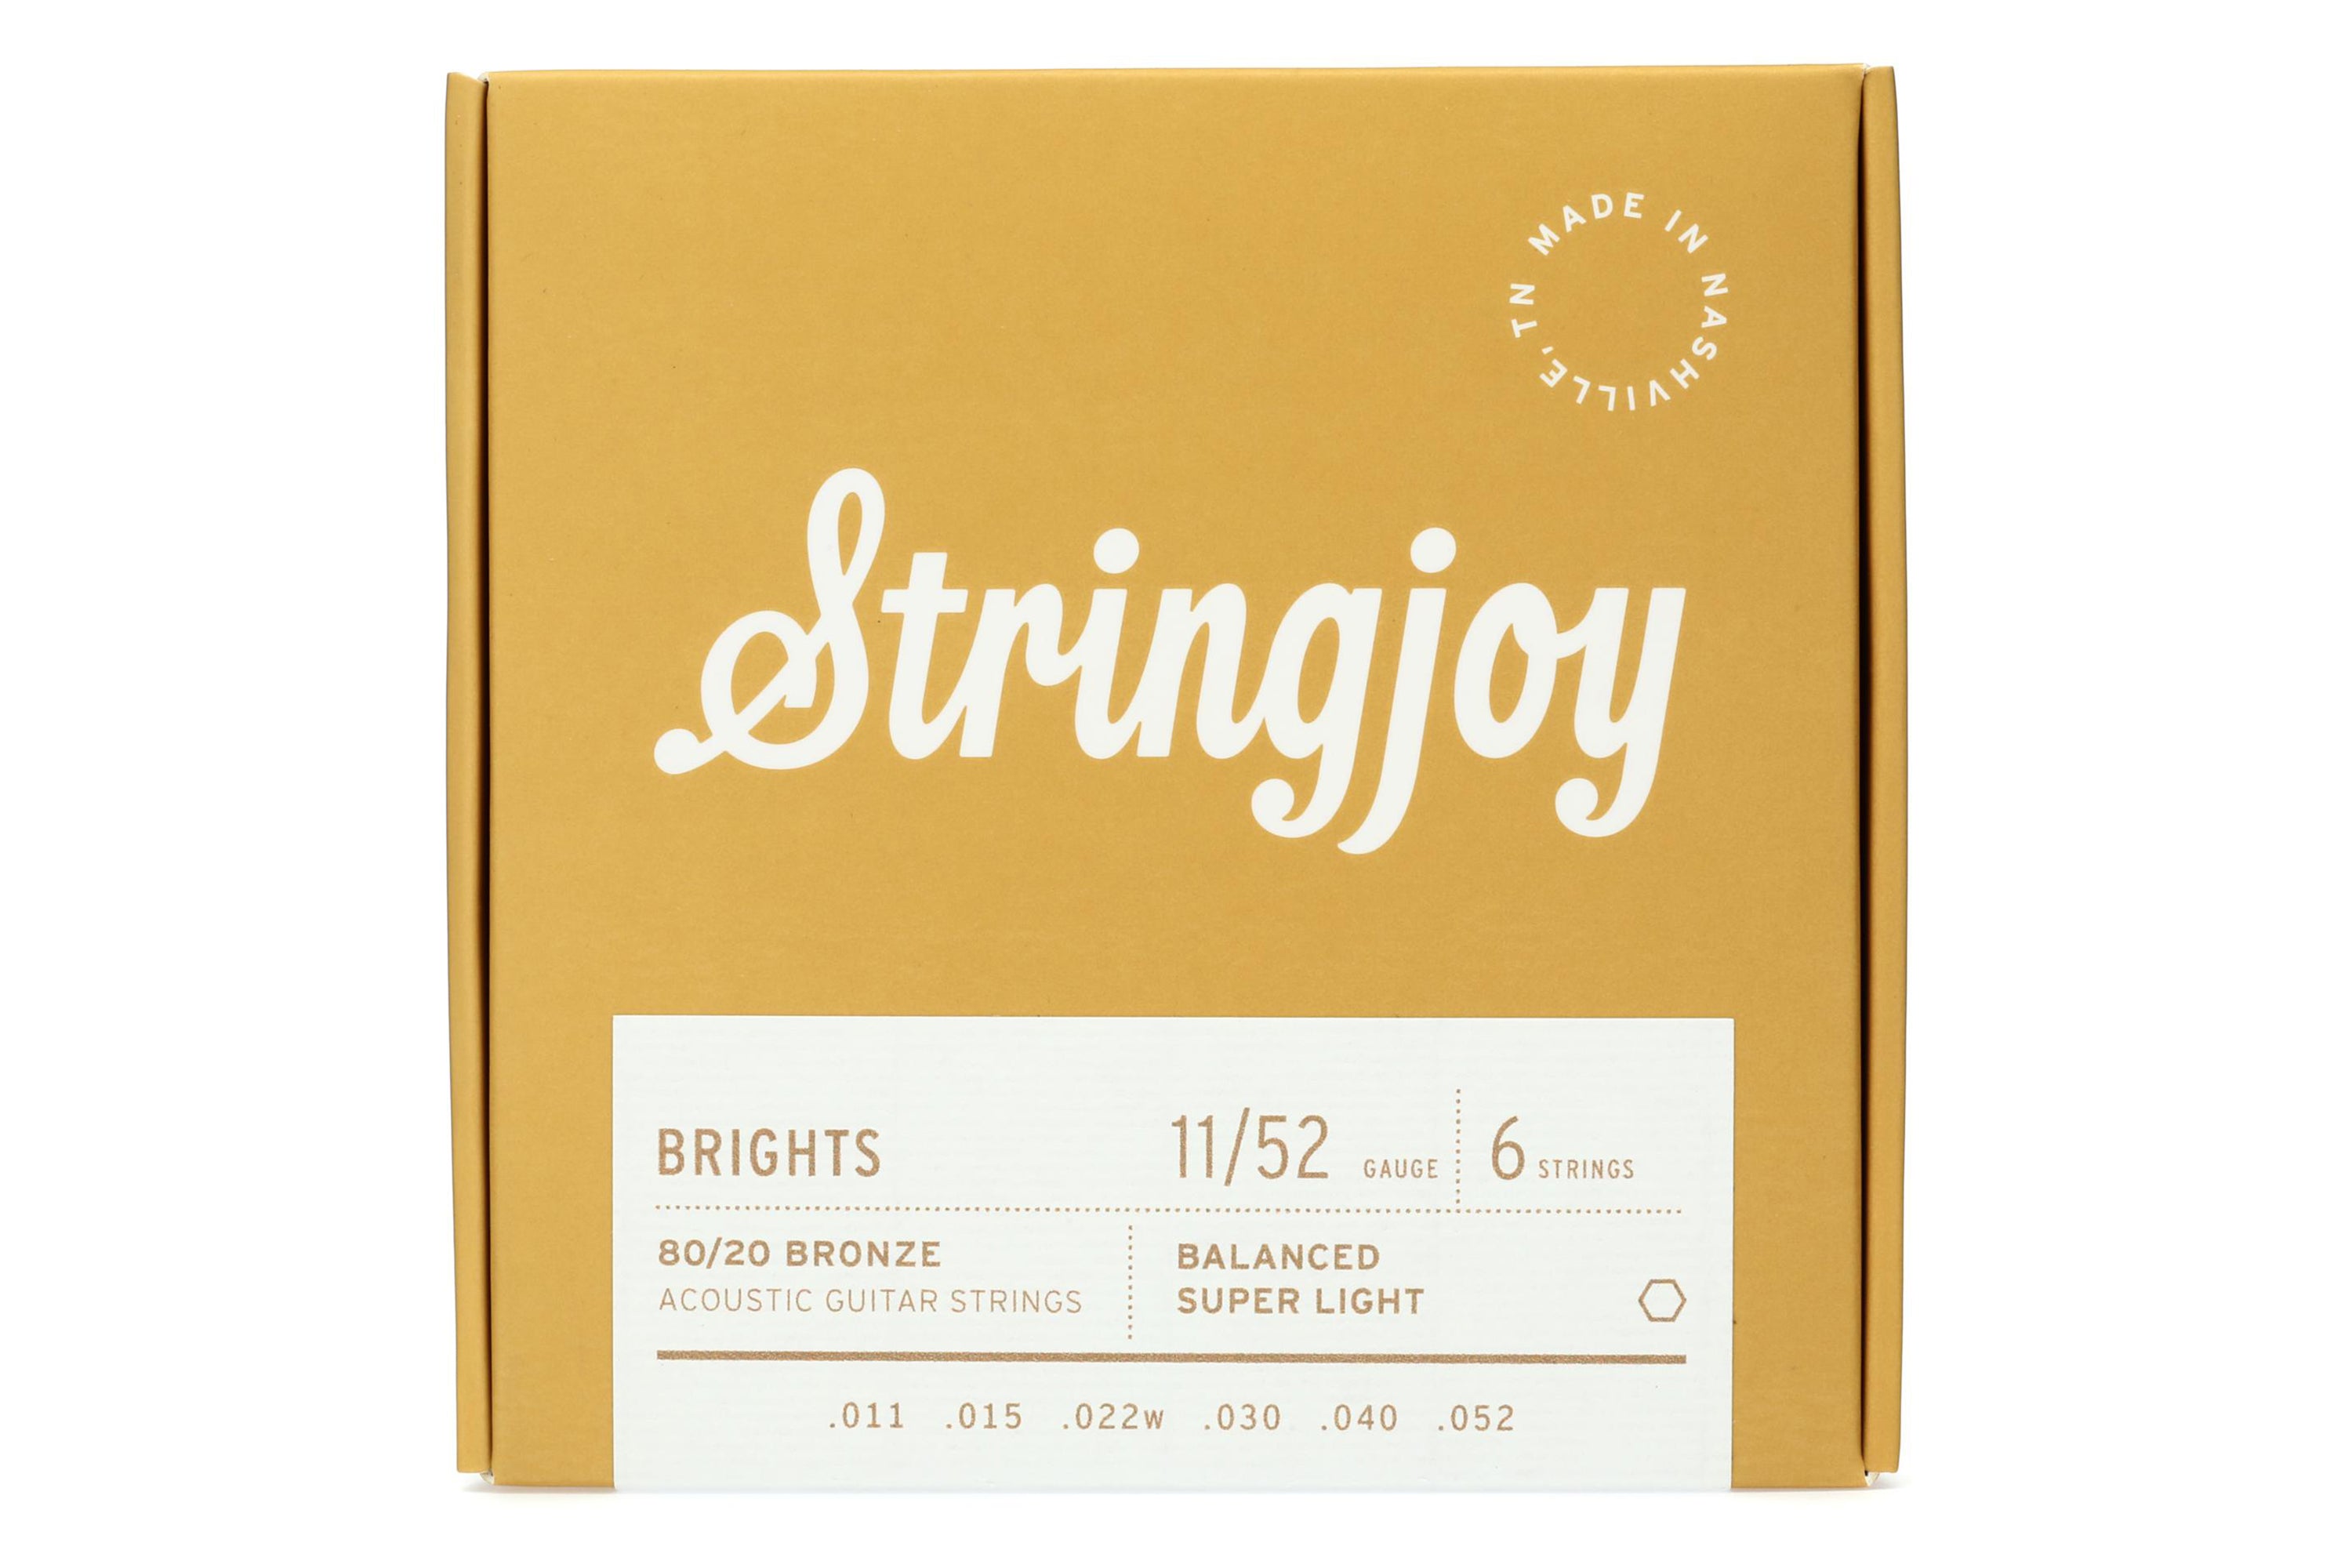 Stringjoy Brights SJ-BB1152 80/20 Bronze Acoustic Guitar Strings - Balanced Super Light .011-.052